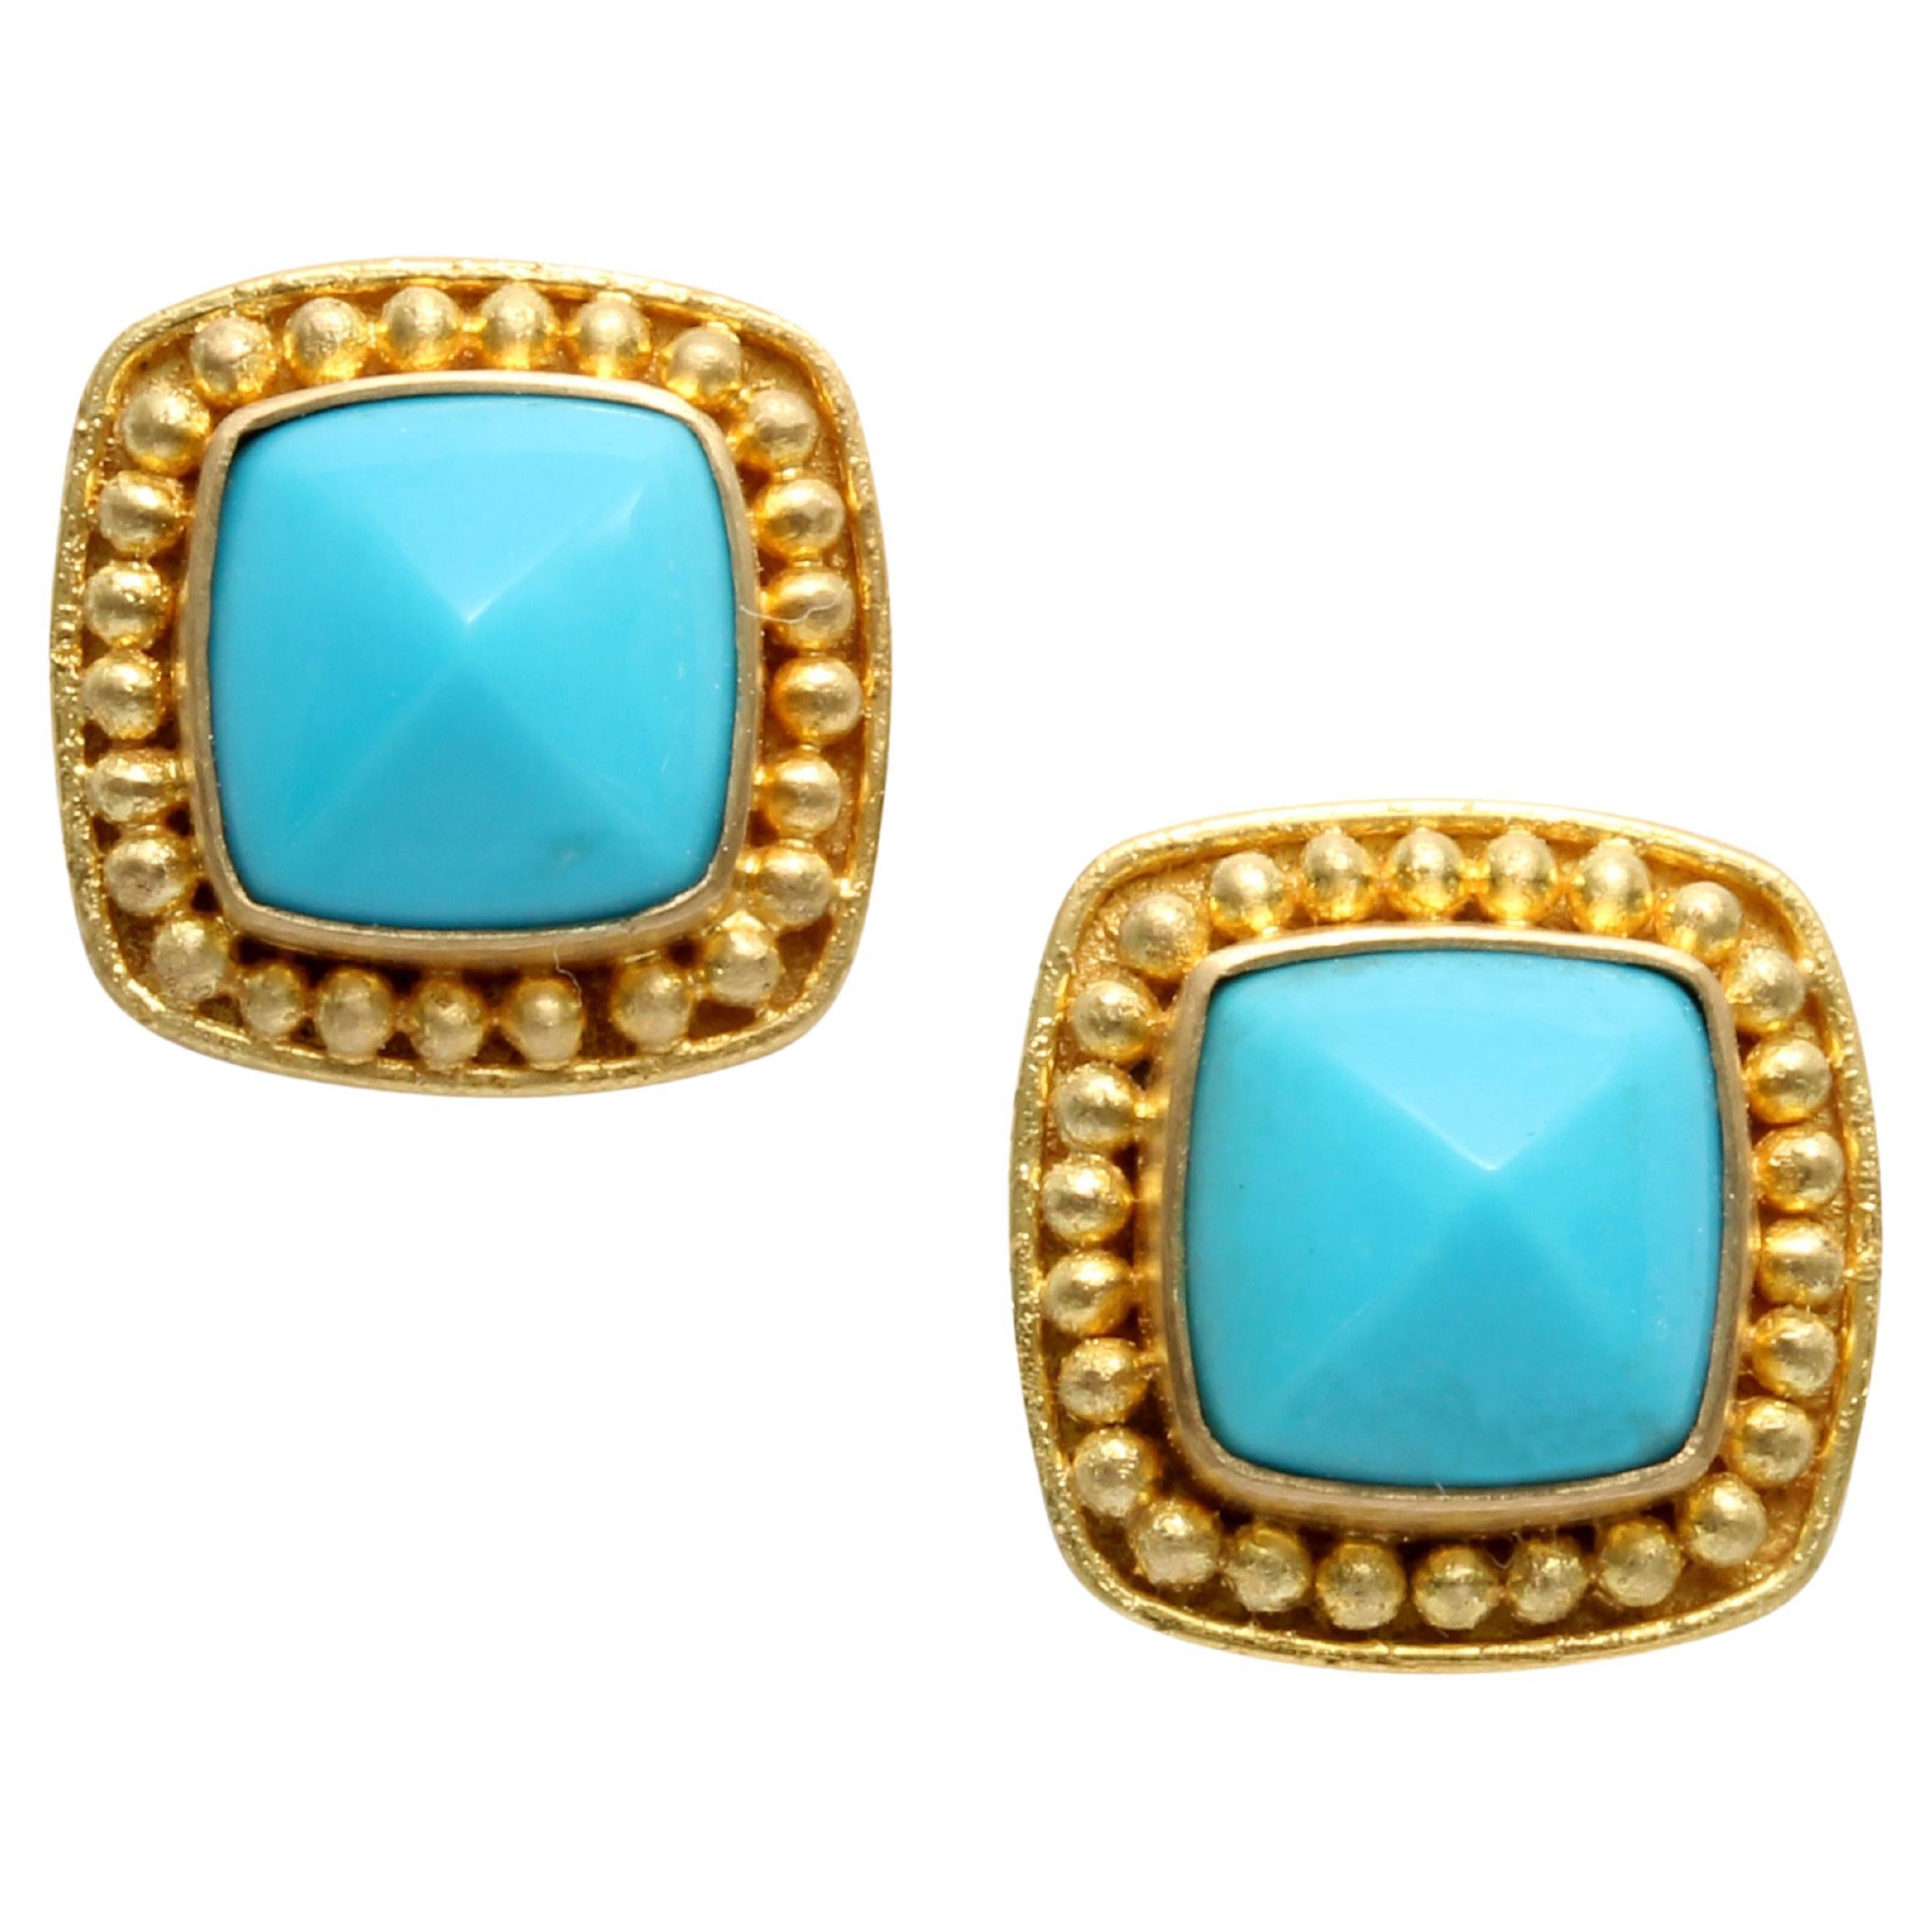 Steven Battelle 4.3 Carats Sleeping Beauty Turquoise 18K Gold Post Earrings